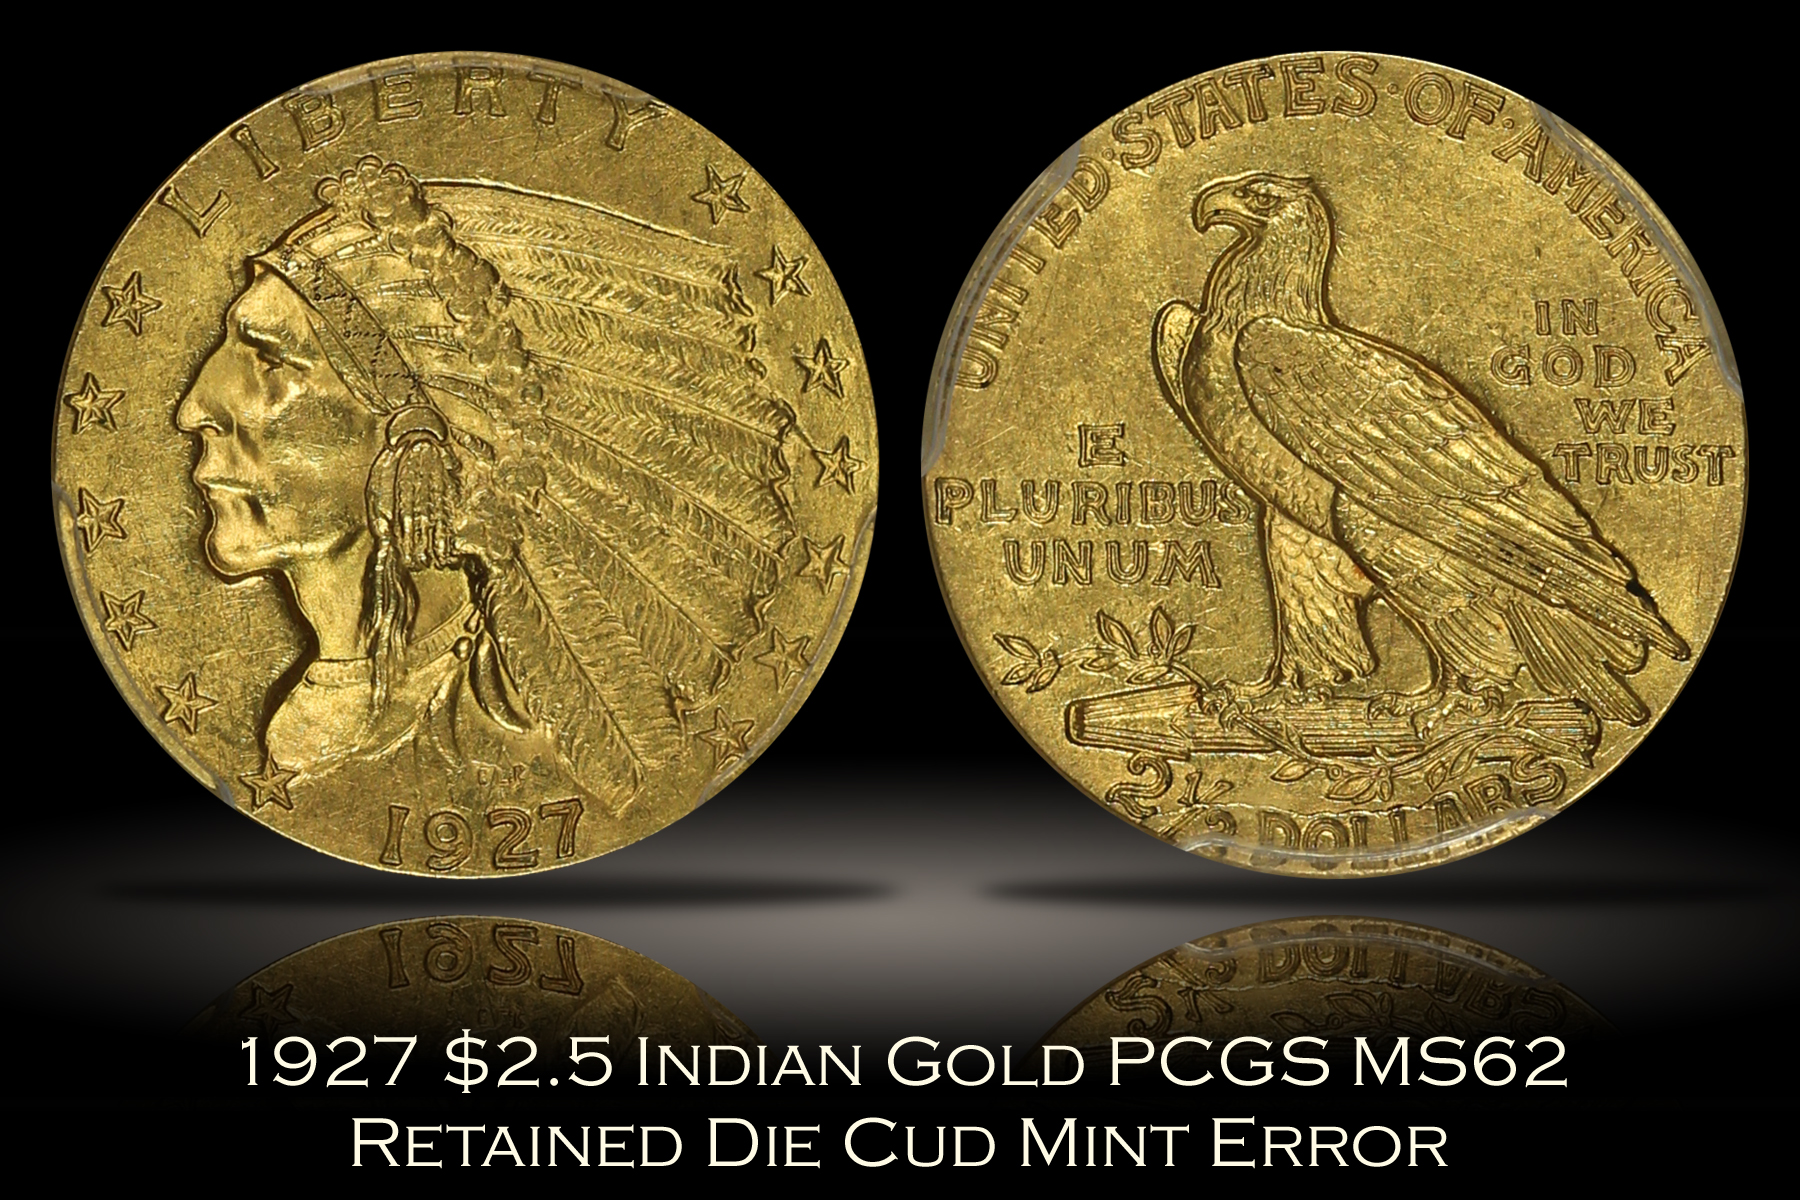 1927 $2.5 Indian Gold PCGS MS62 Retained Die Cud Error